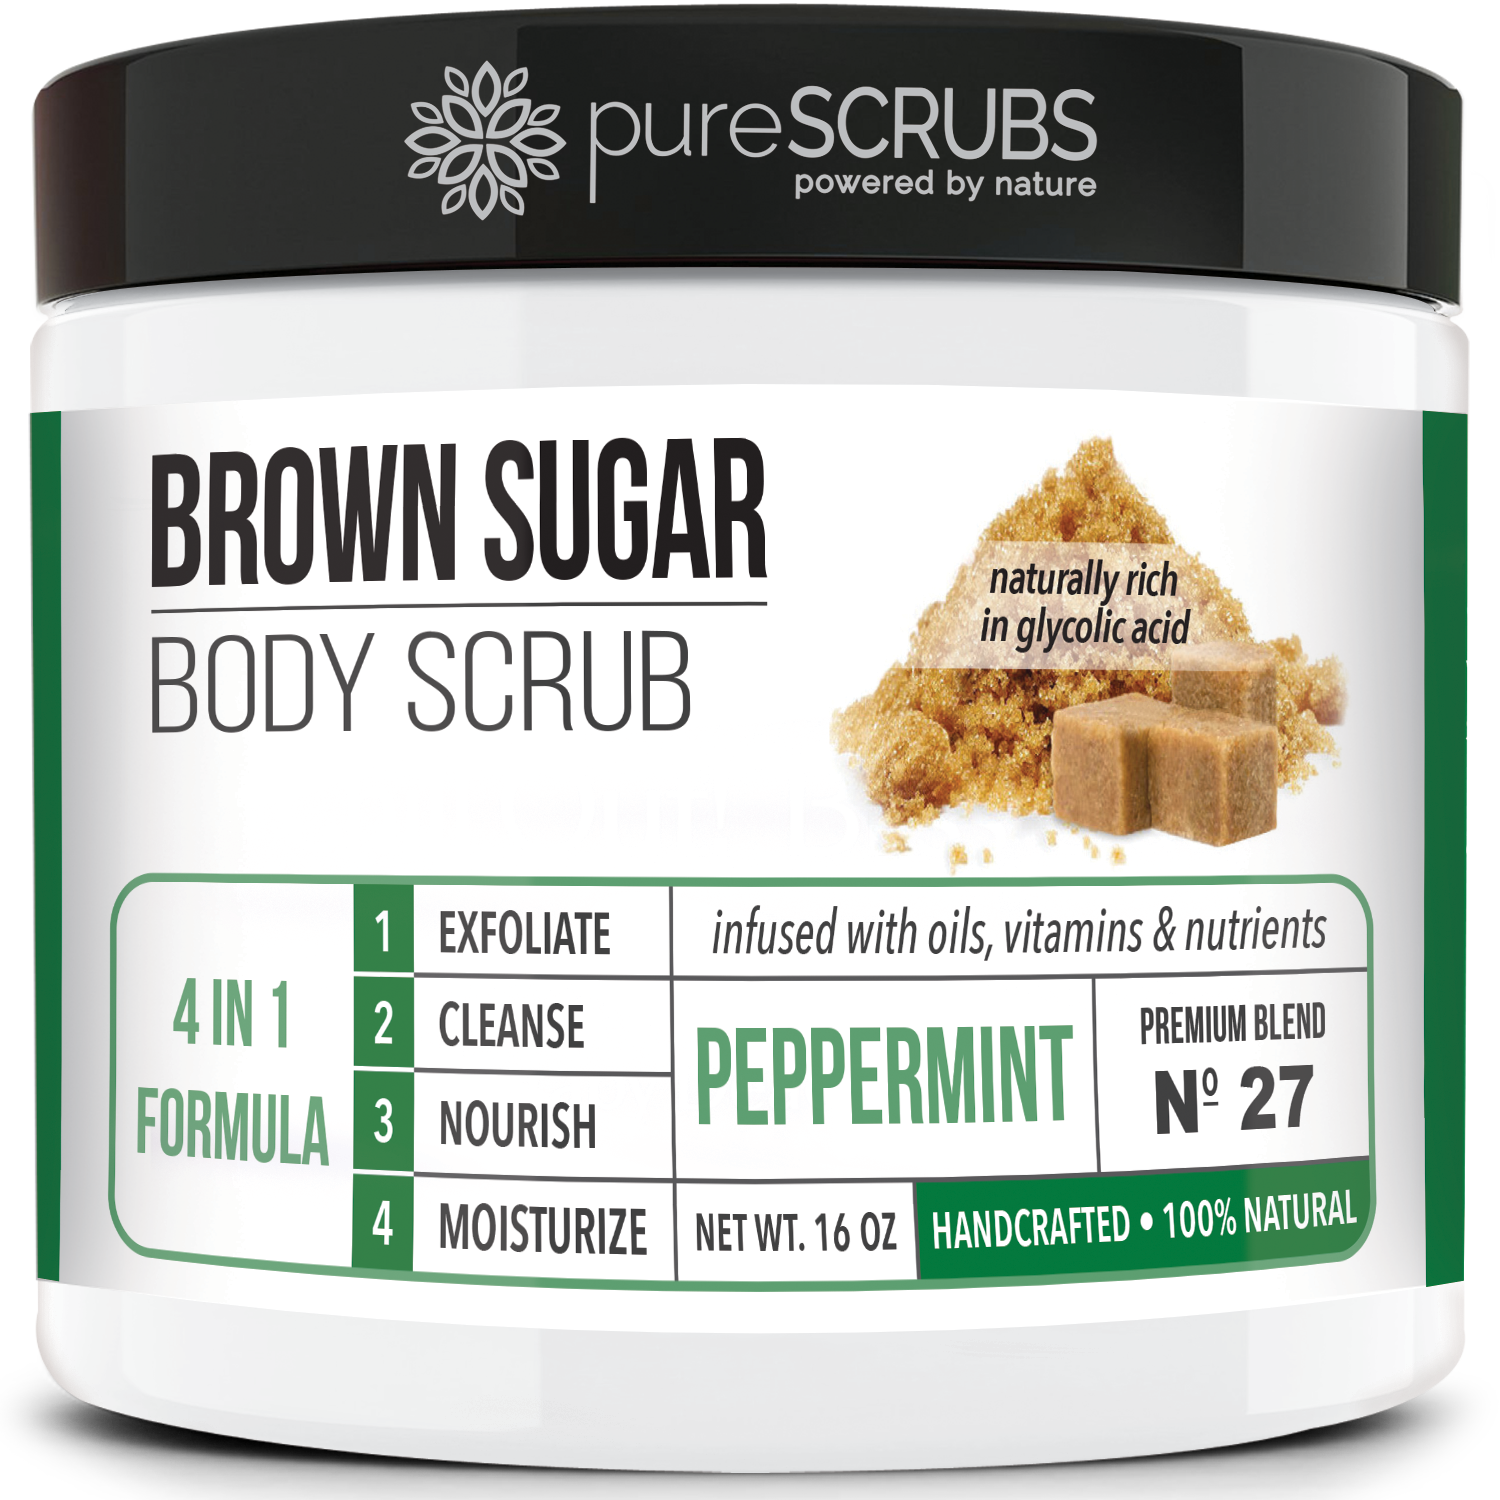 Peppermint Body Scrub / Brown Sugar / Premium Blend #27